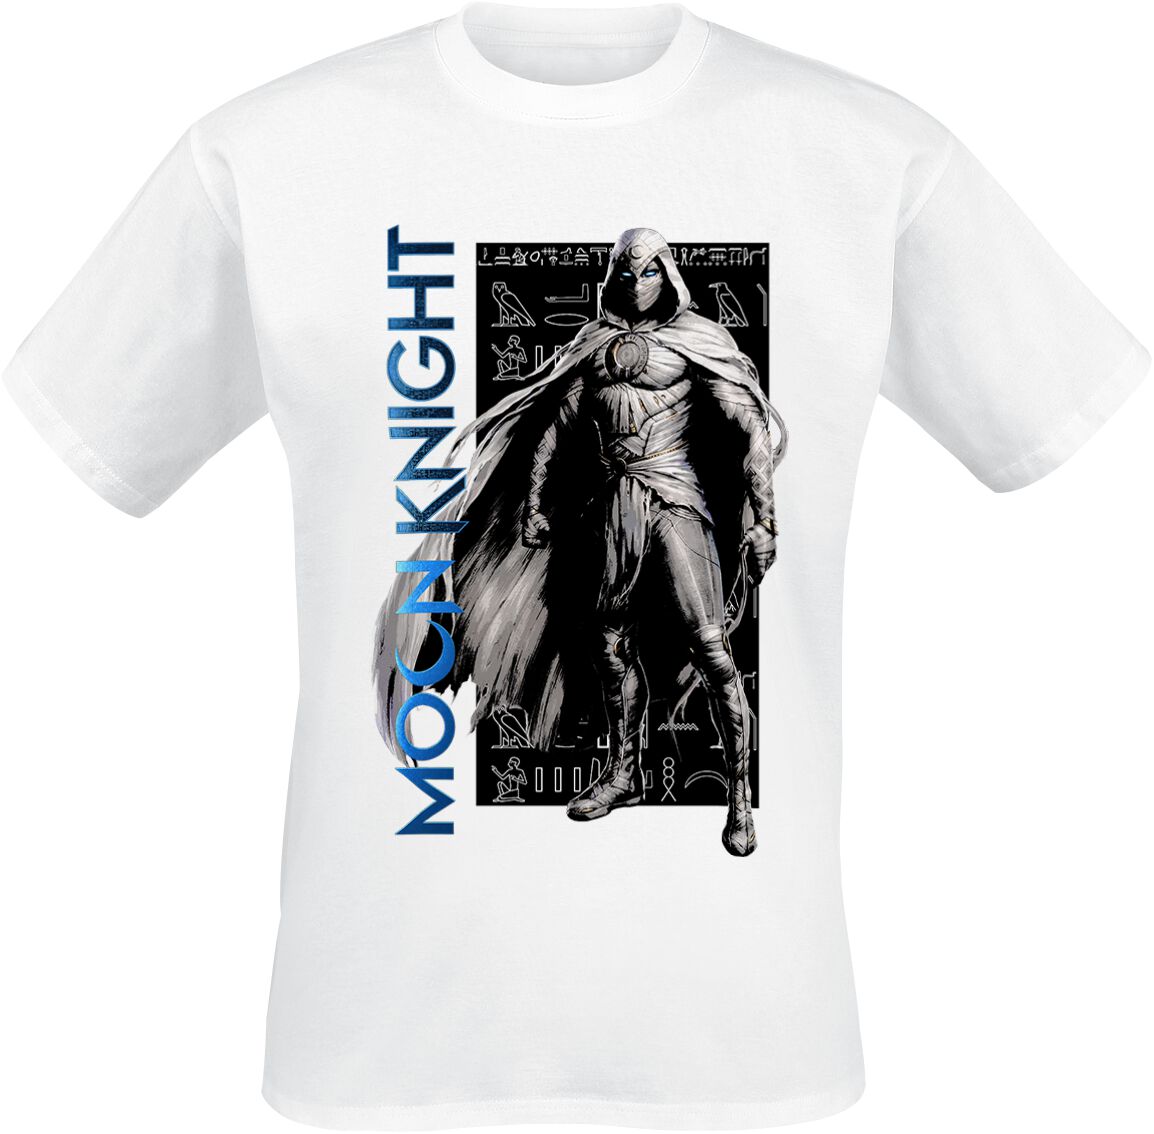 Moon Knight That Knight T-Shirt white